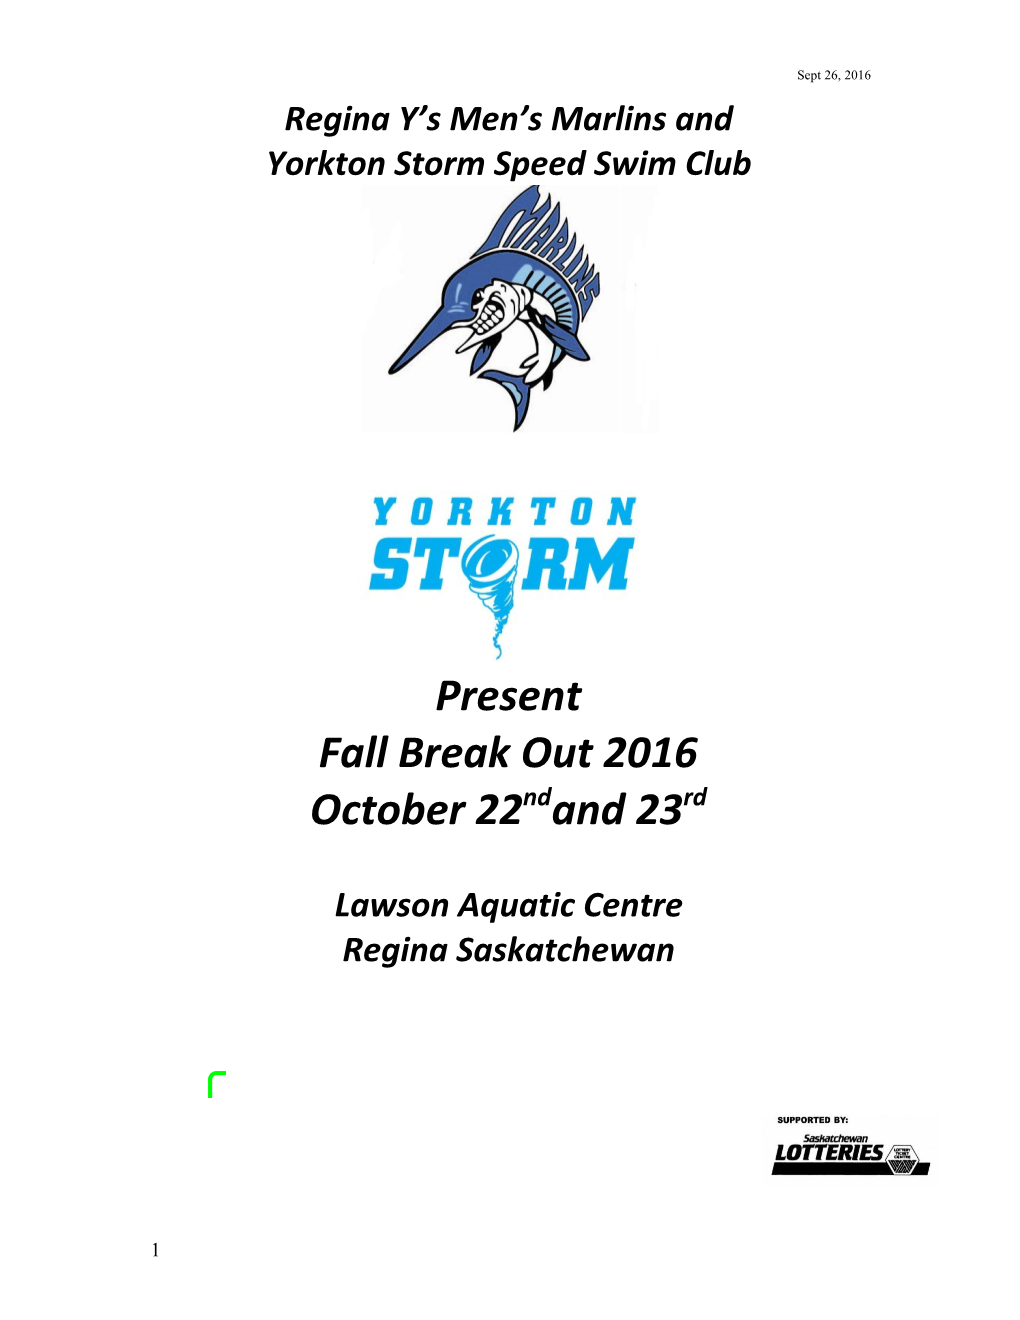 Yorkton Storm Speed Swim Club